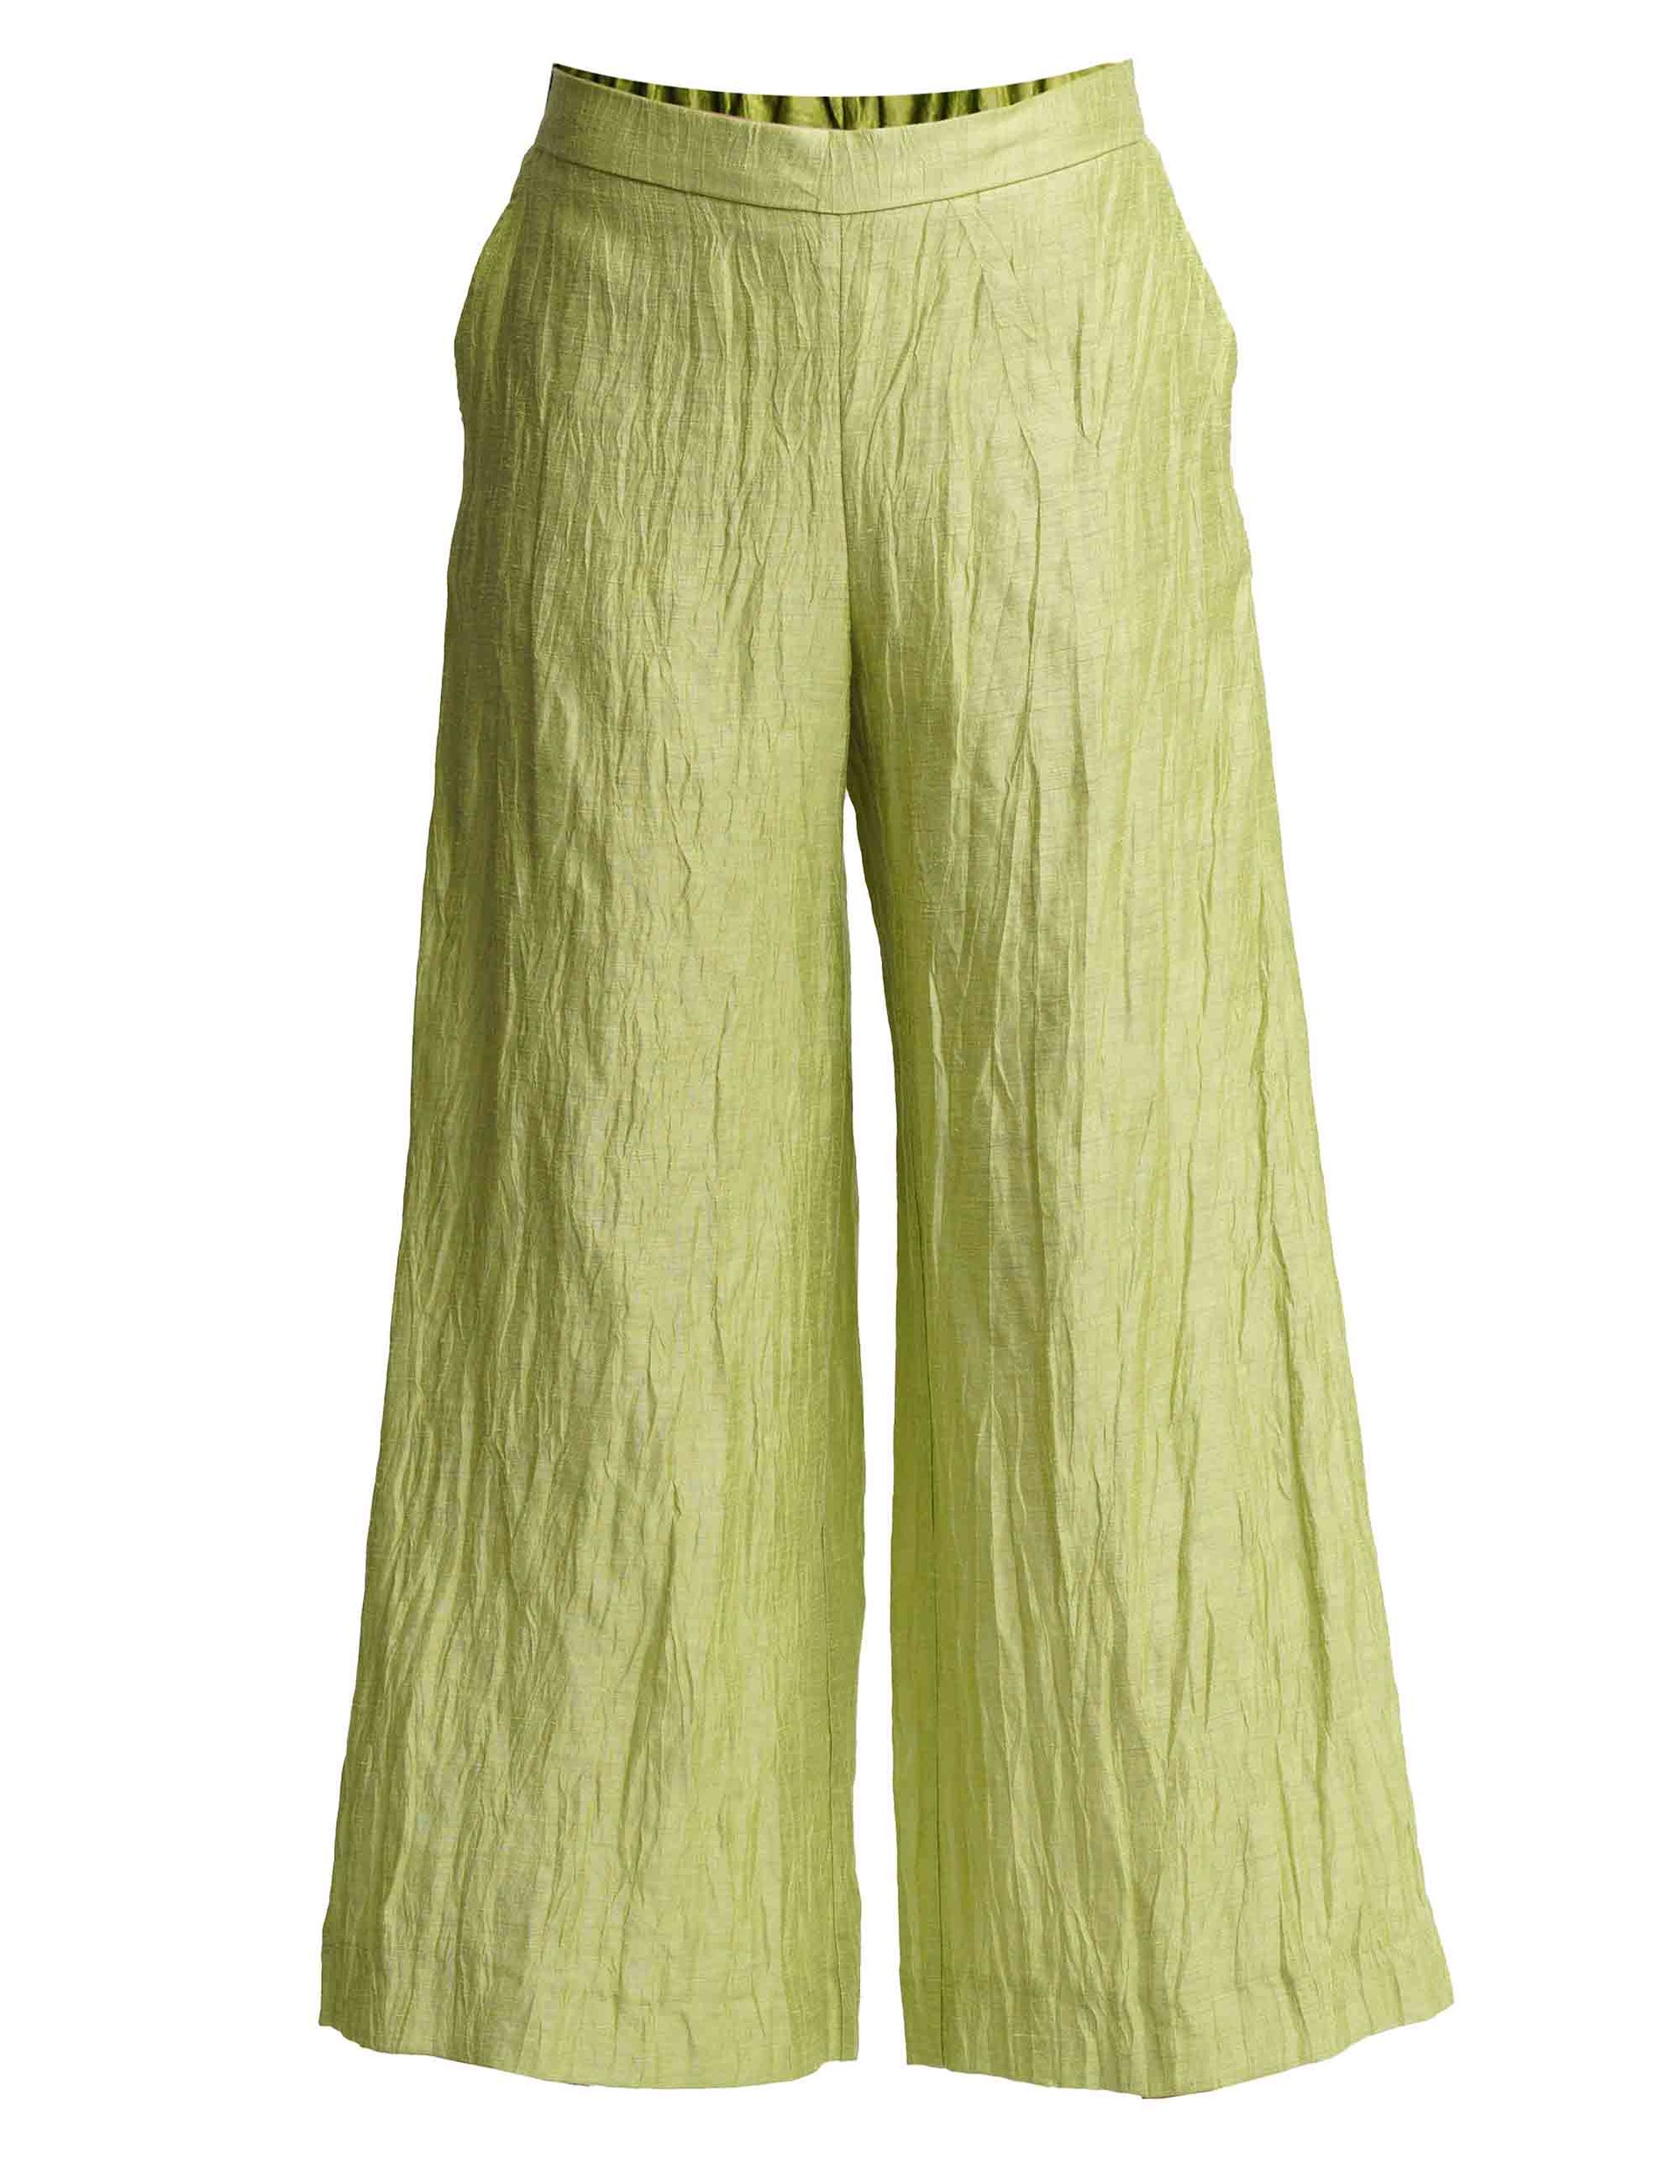 Froissé women's trousers in green linen with wide leg